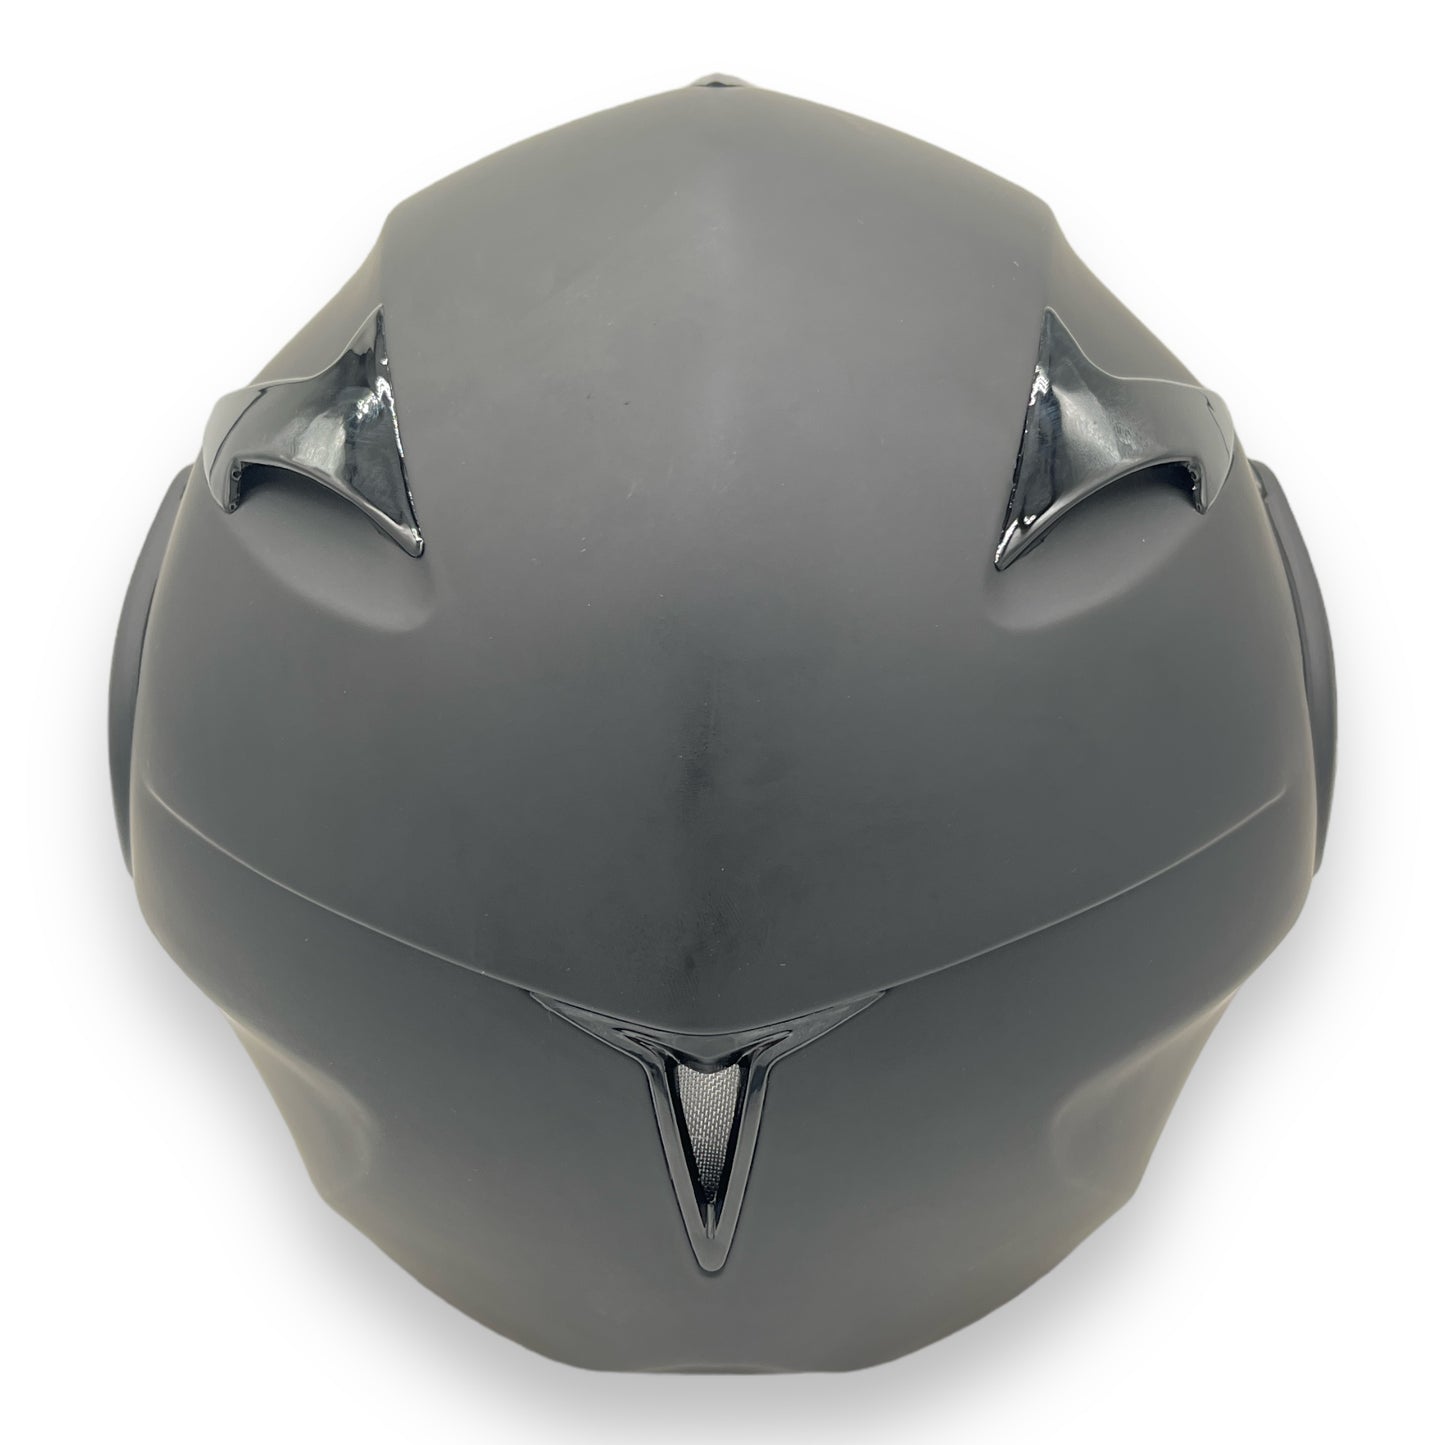 BHR - PM001 - Helmet Black